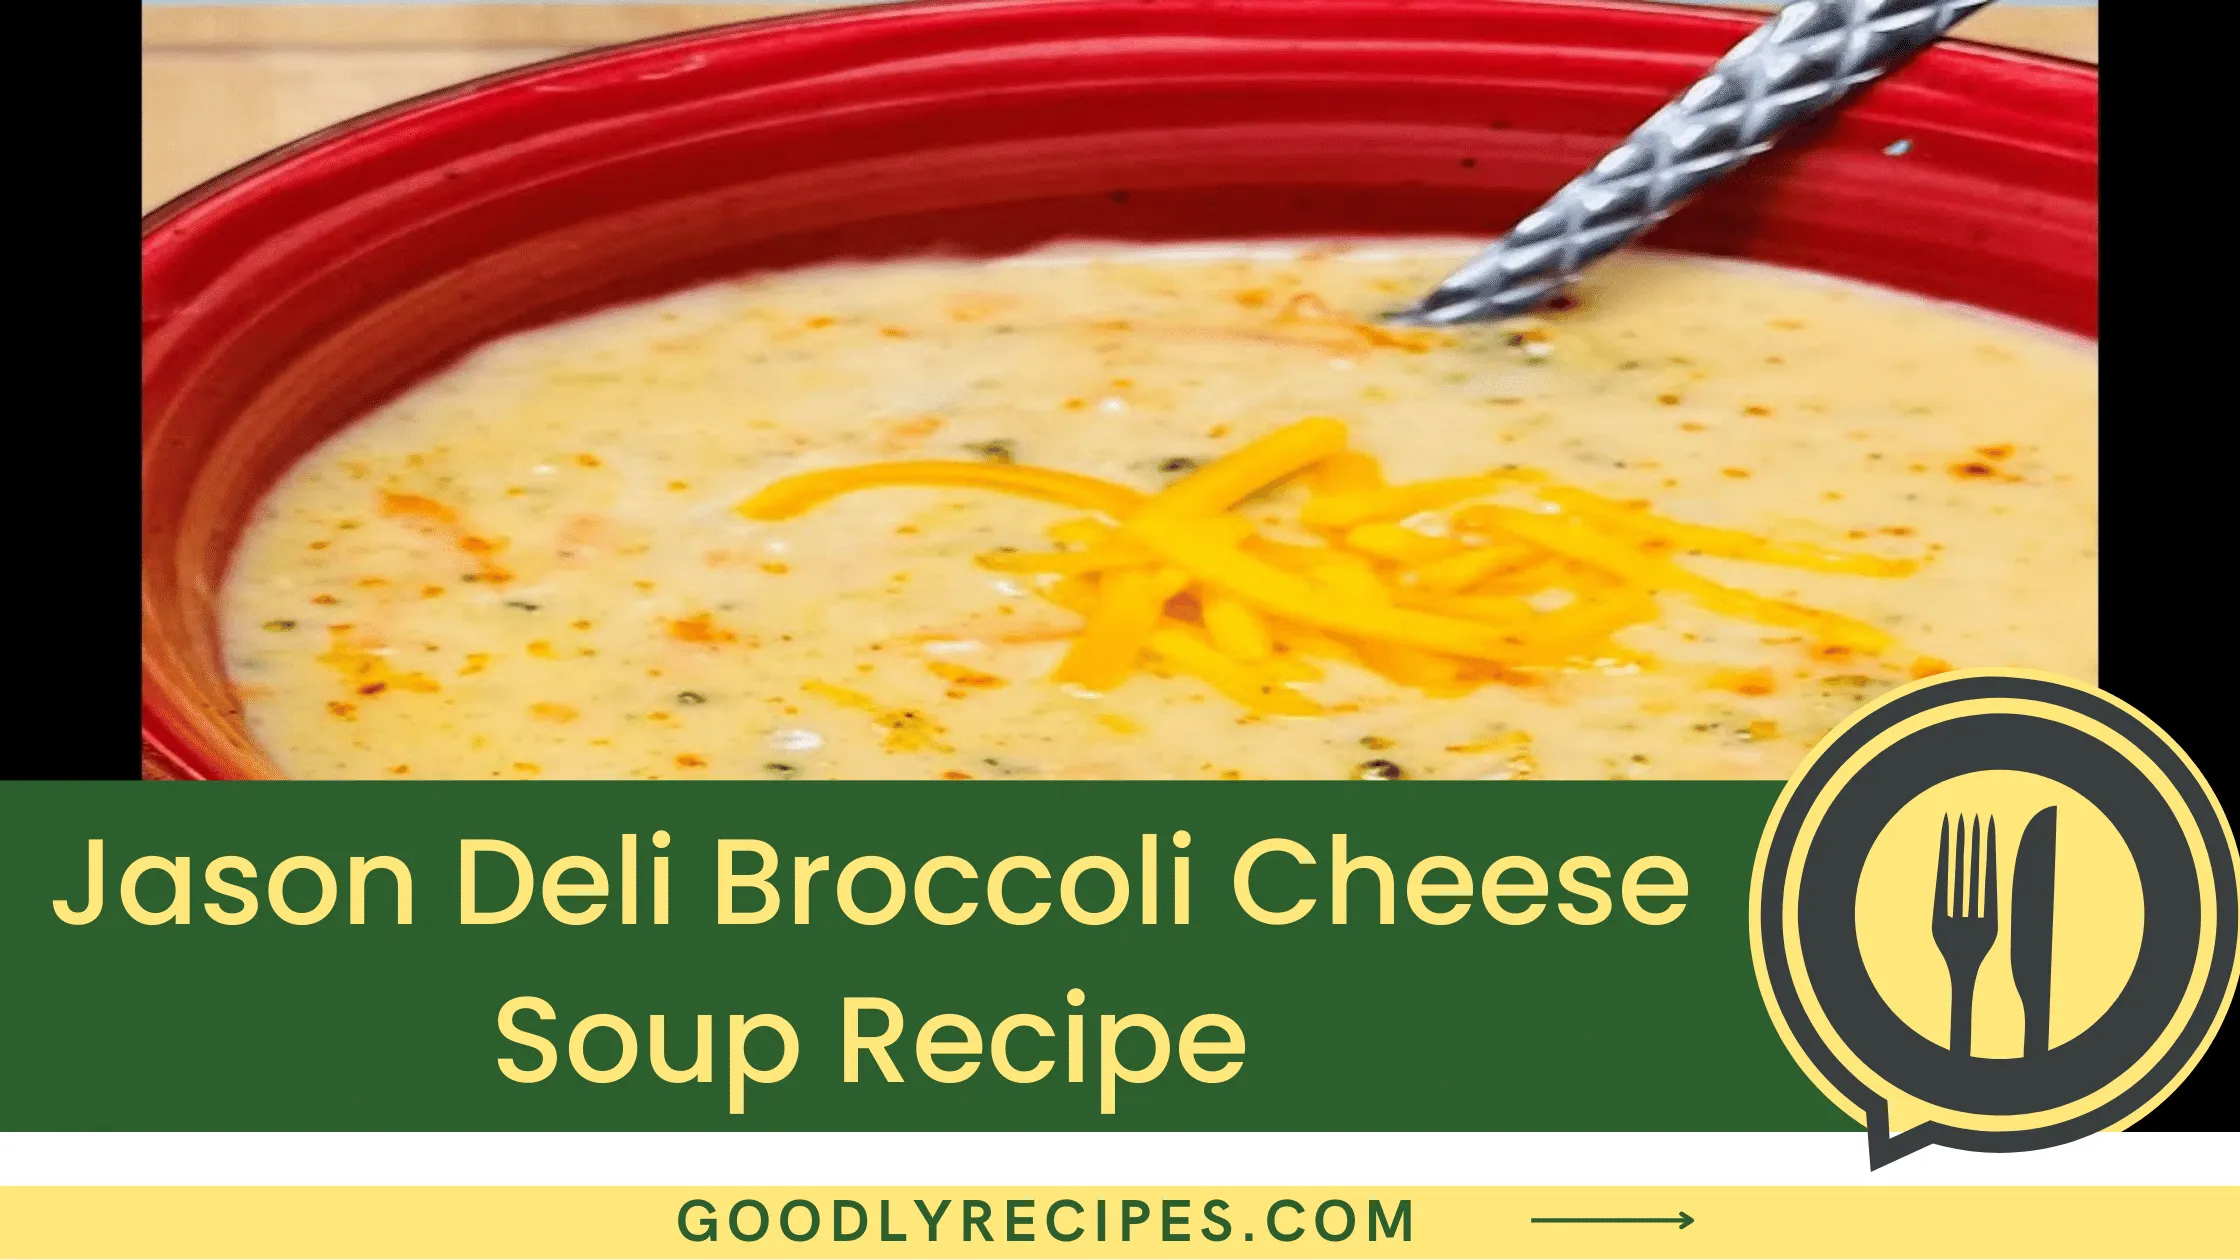 Jason Deli Broccoli Cheese Soup Recipe - For Food Lovers